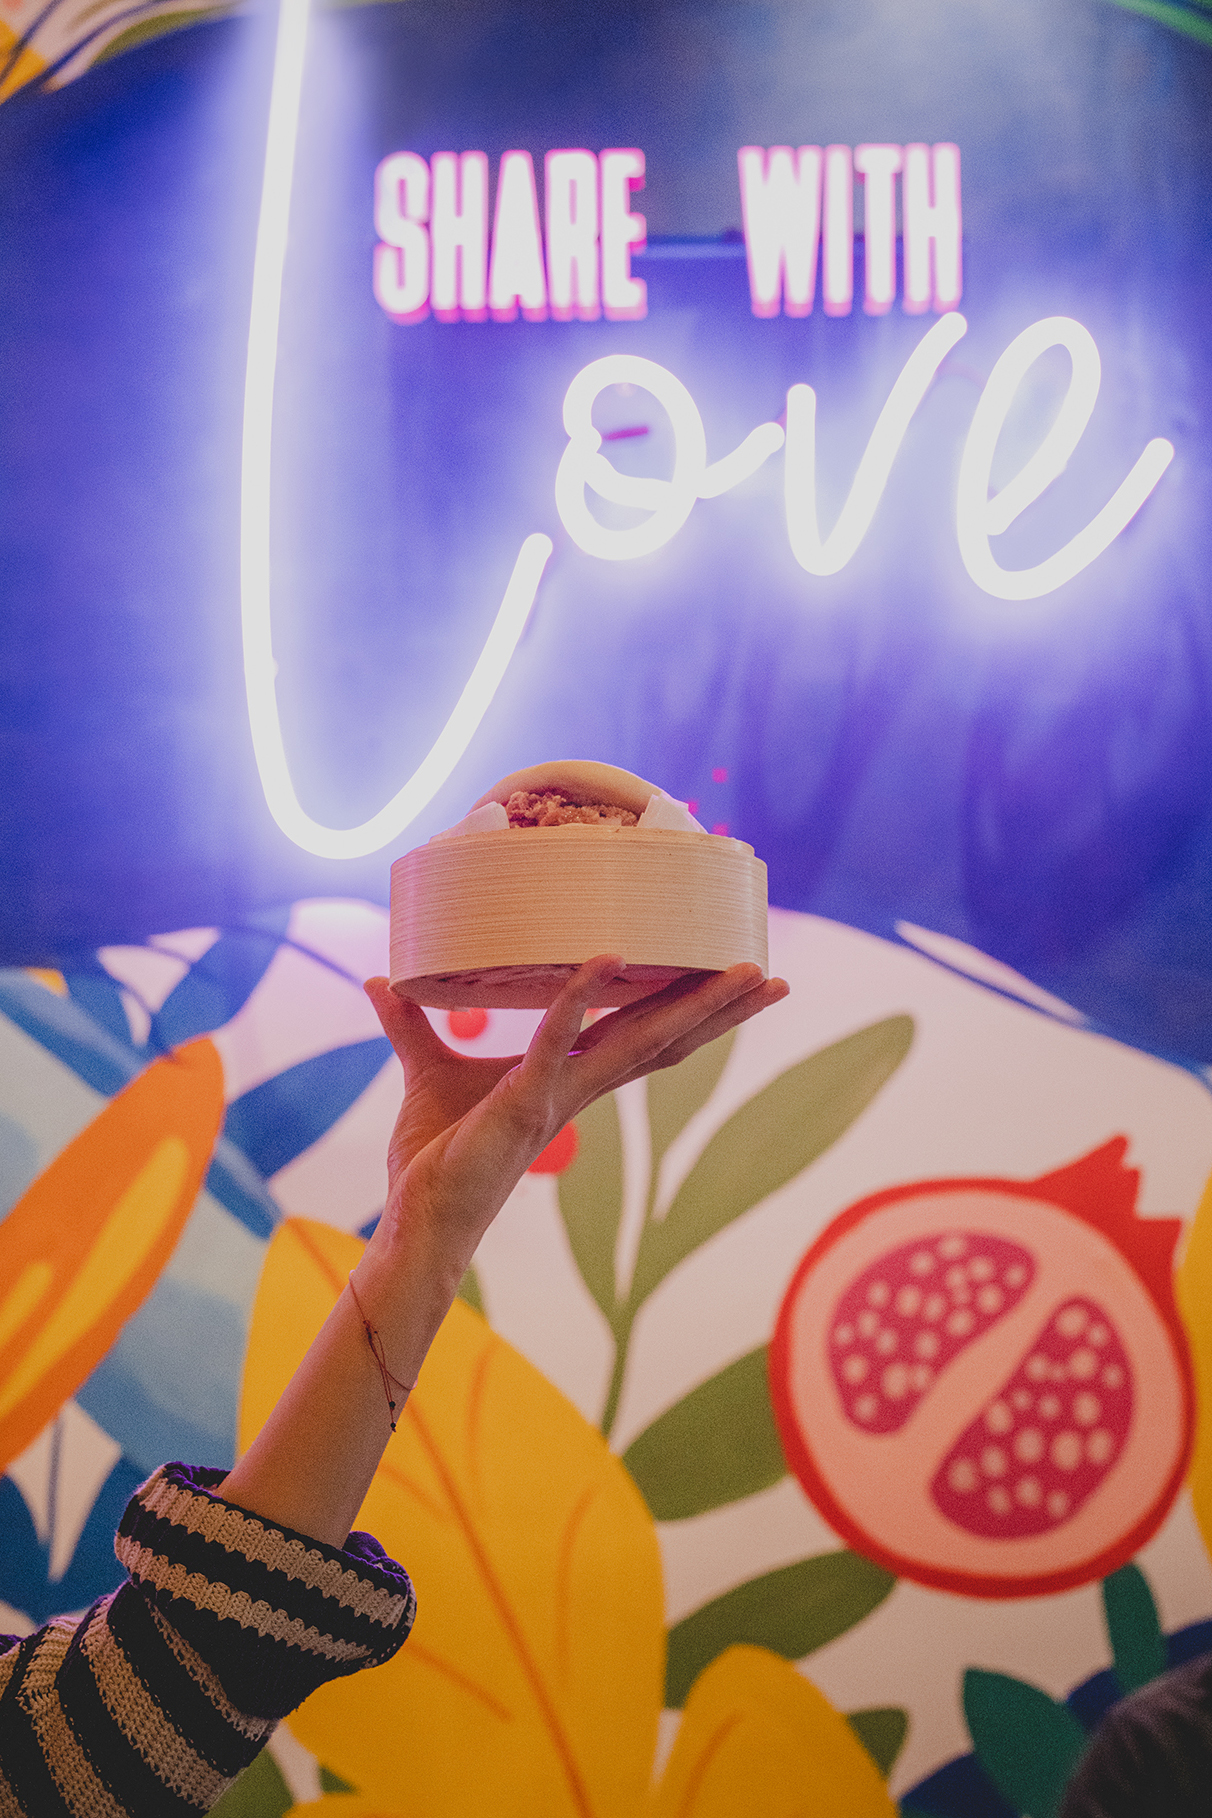 hand holding Bao bun on neon text "share with love"